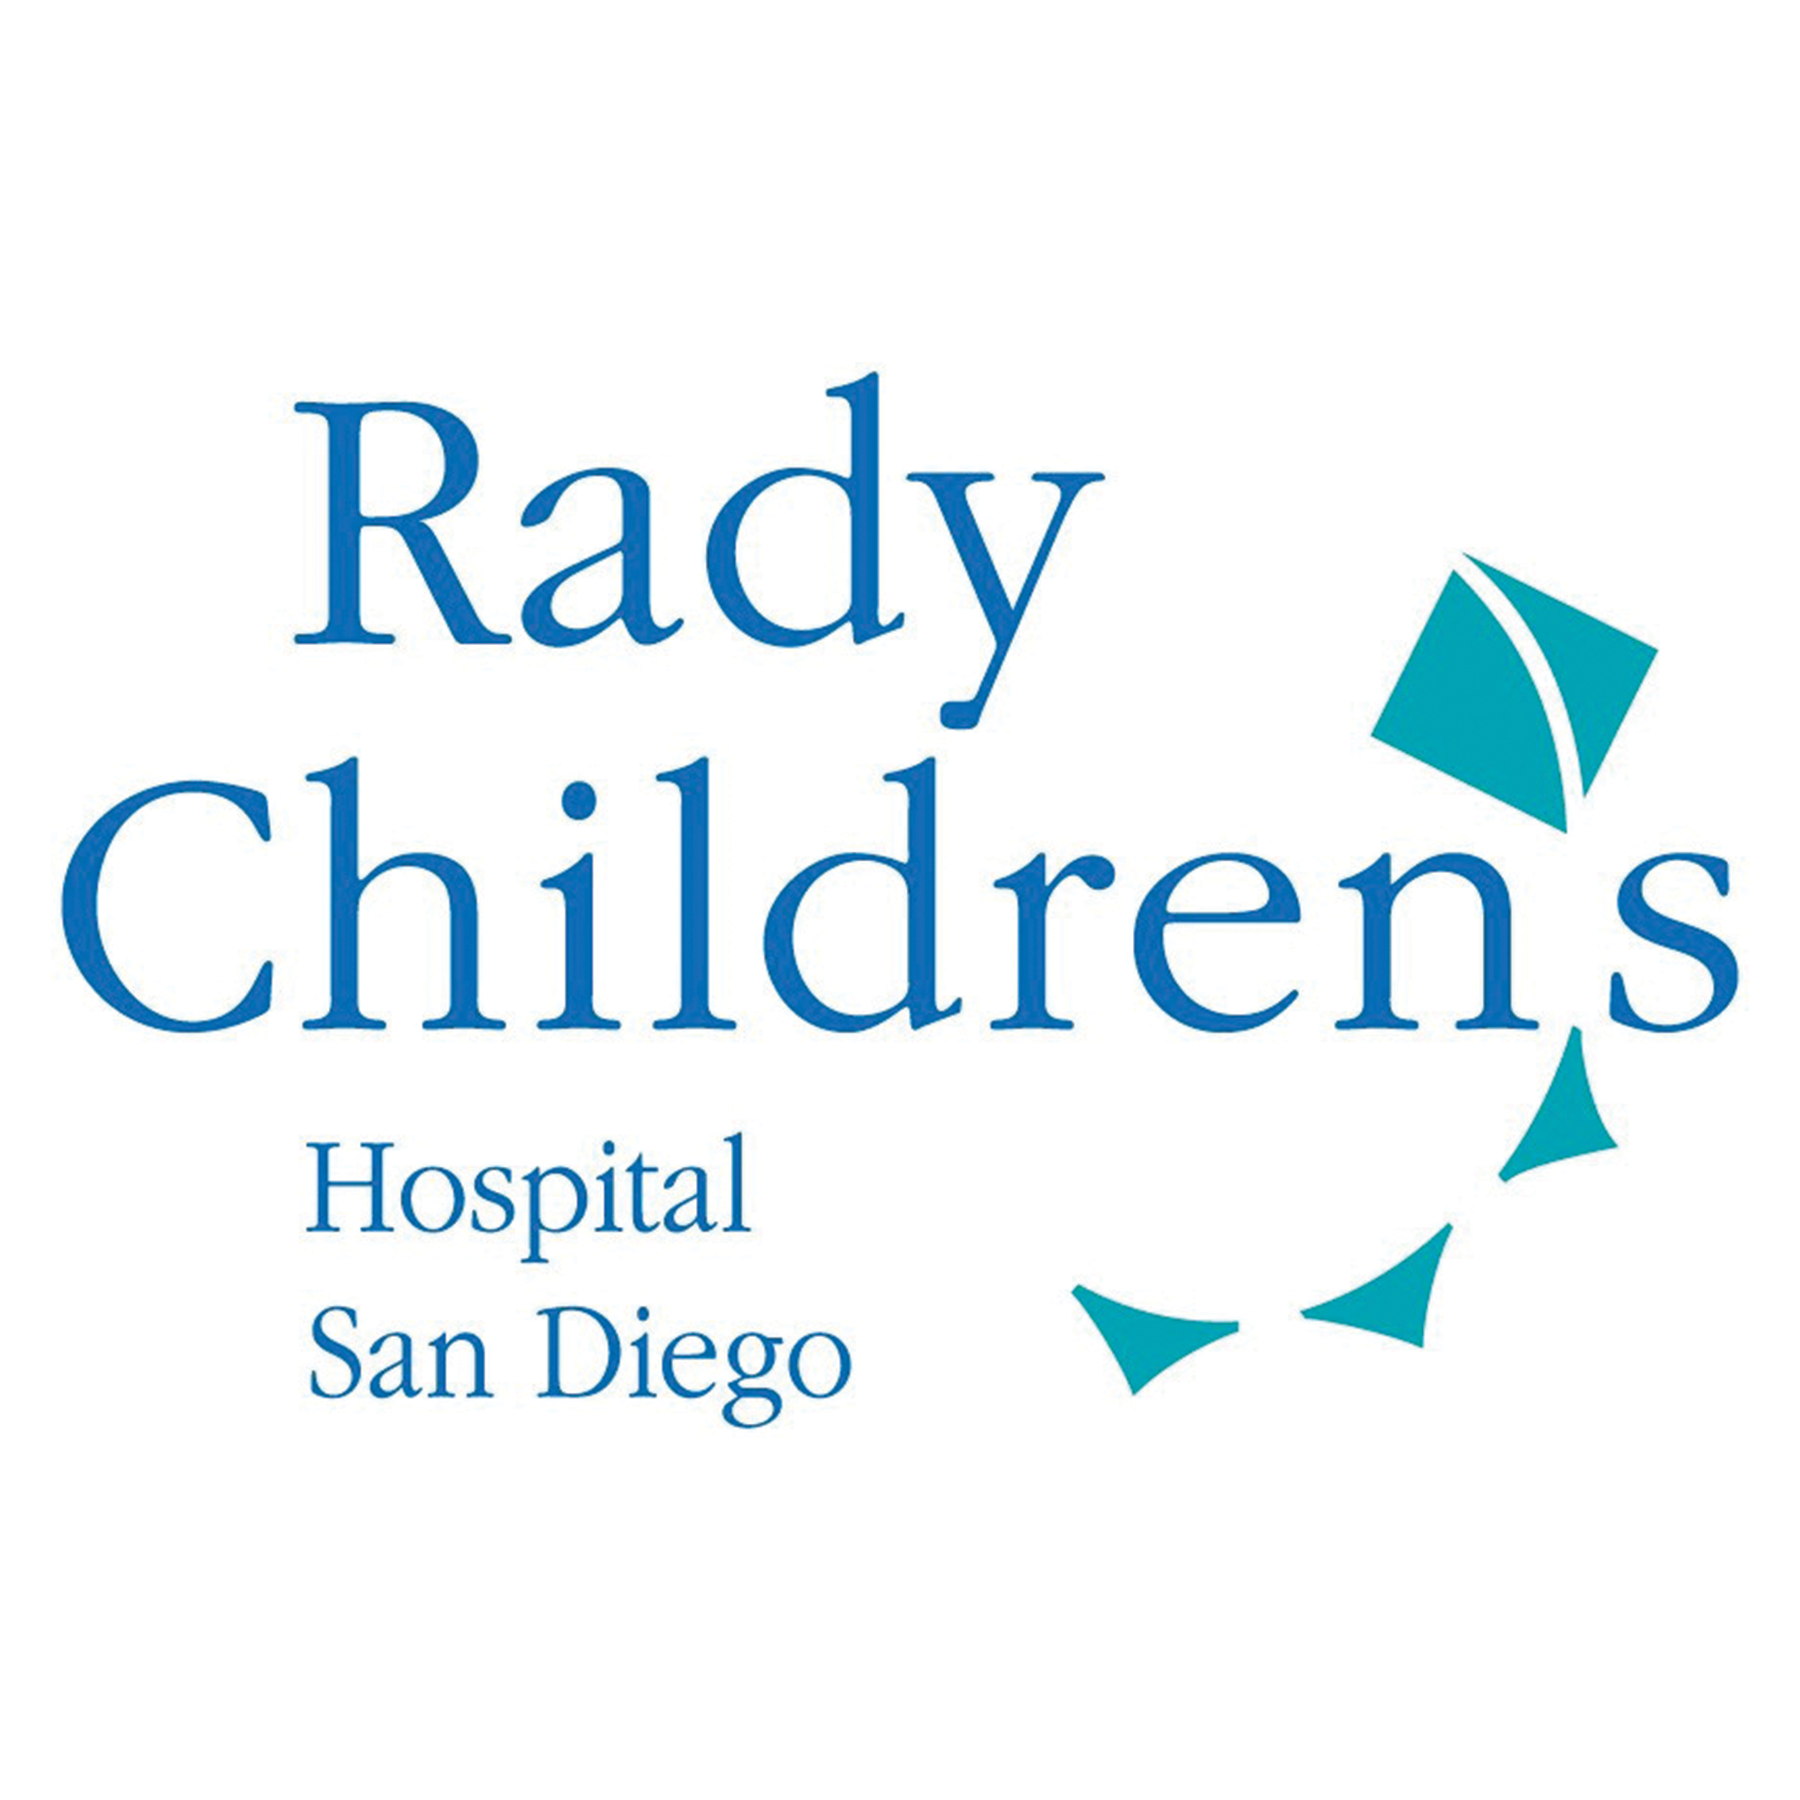 Rady Childrens Hospital San Diego